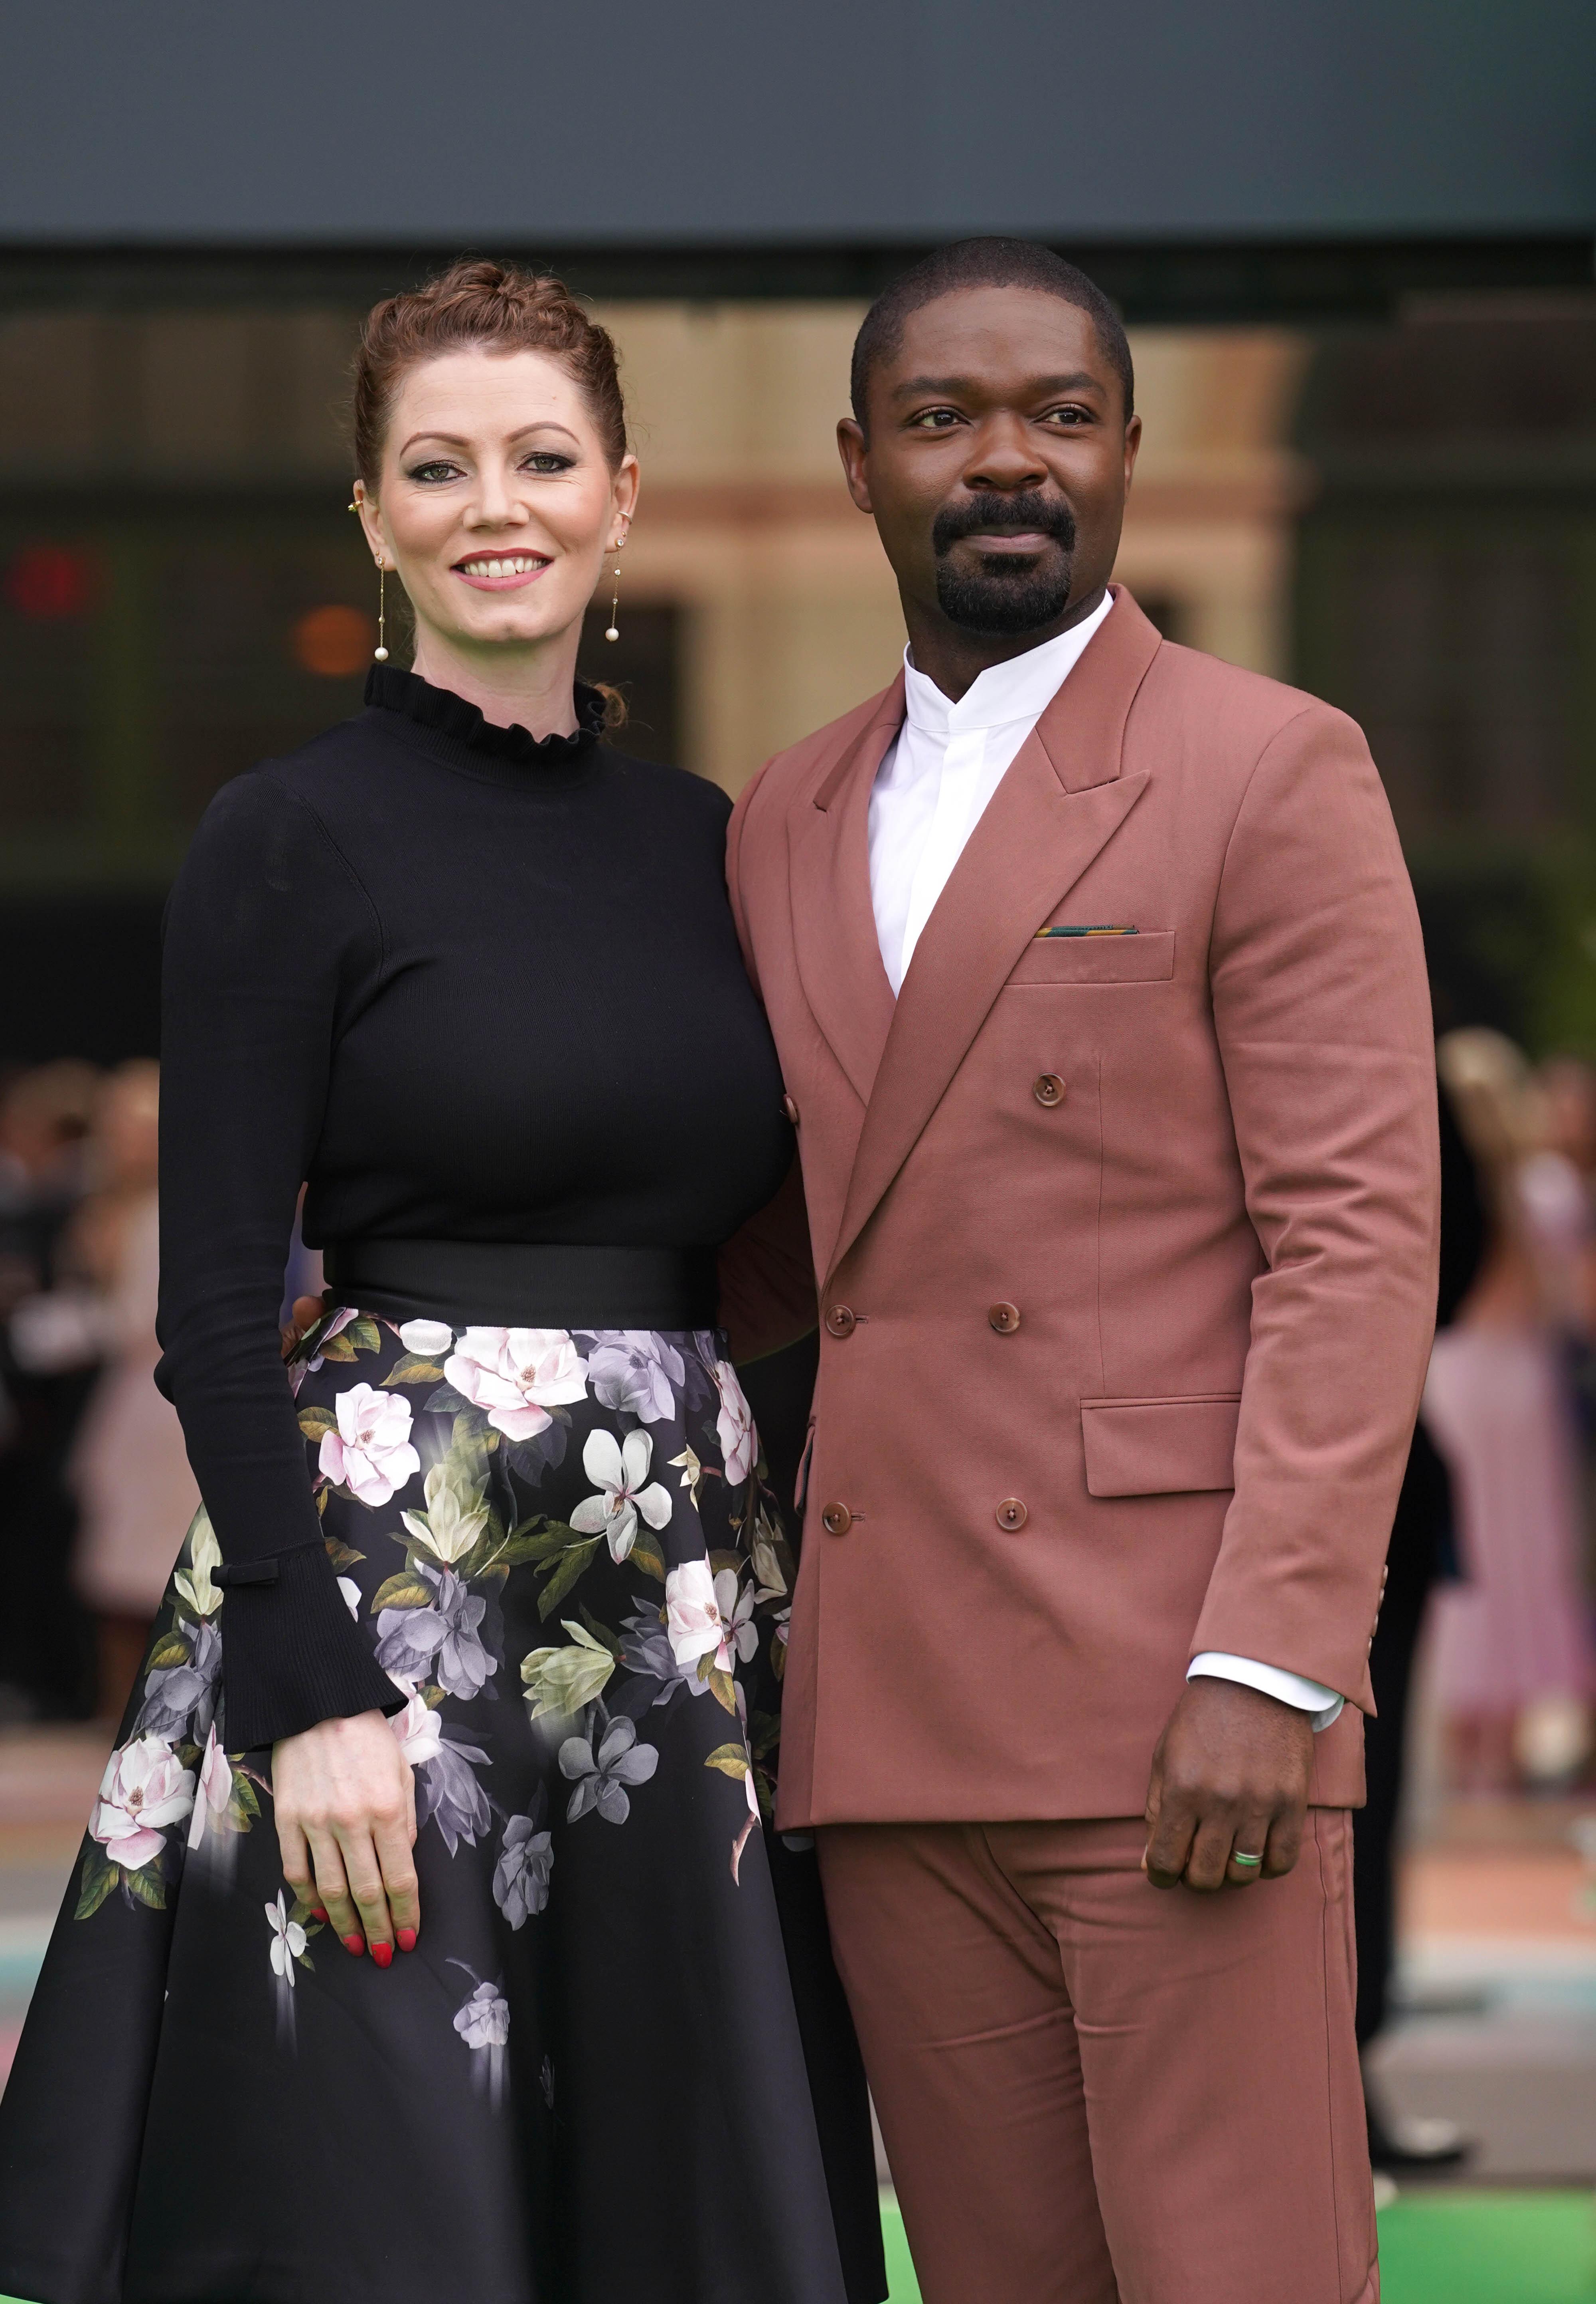 FARGEGLAD: David Oyelowo i en fargesterk dress. Her sammen med sin kone Jessica Oyelowo.